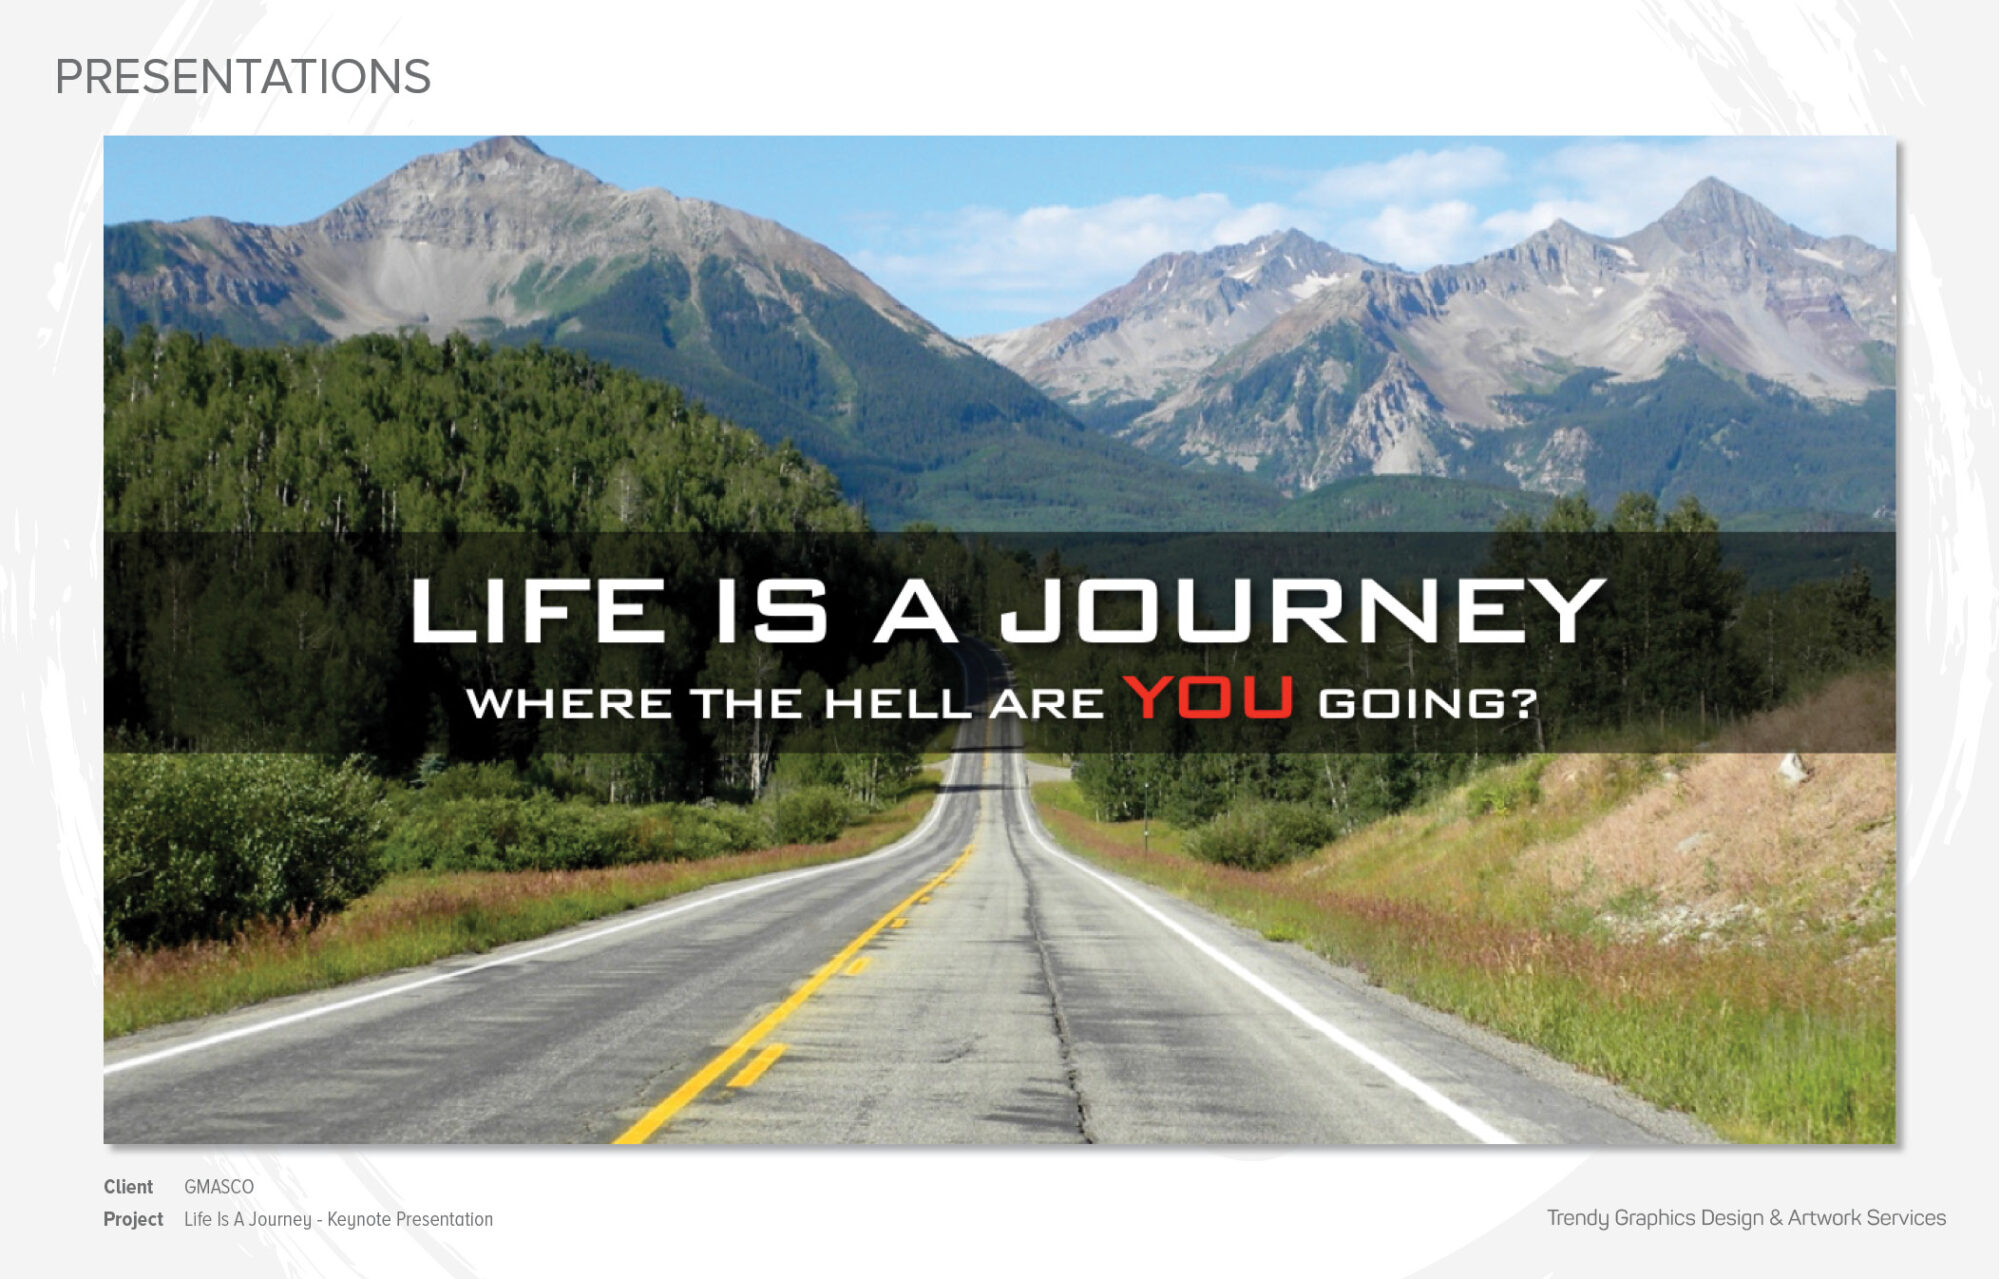 GMASCO – Life Is A Journey (Keynote Presentation)